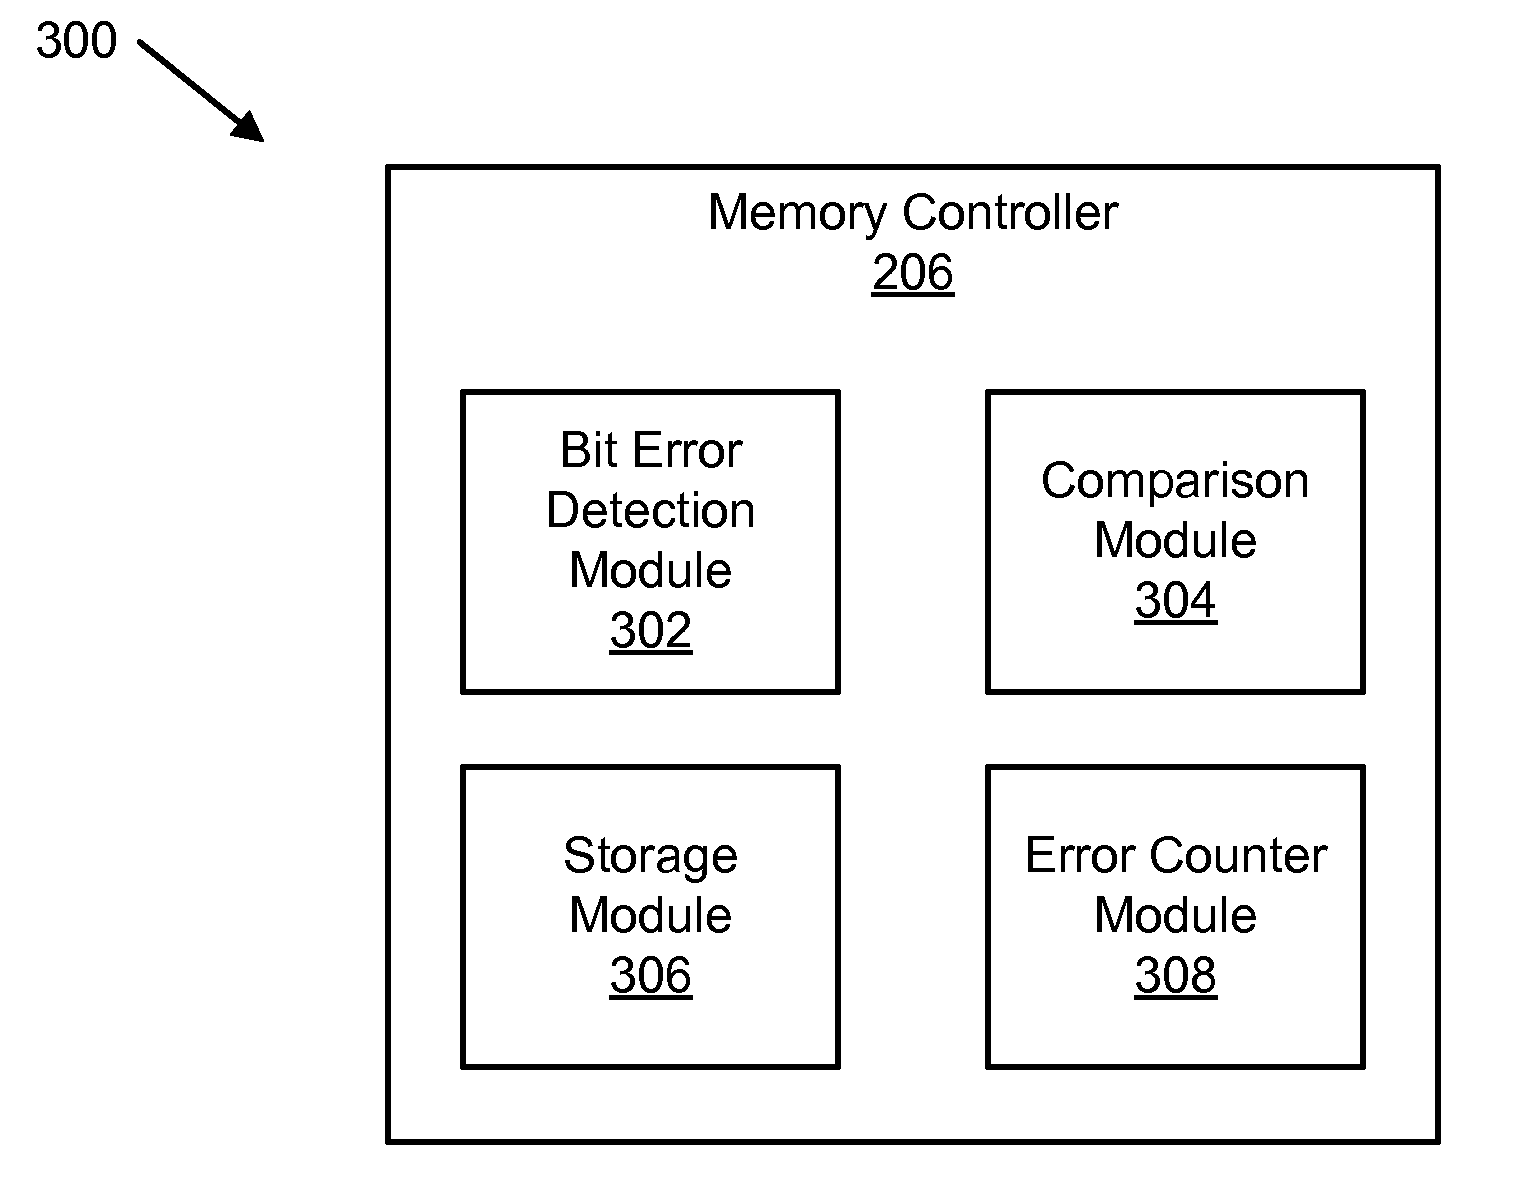 Apparatus and method for distinguishing single bit errors in memory modules